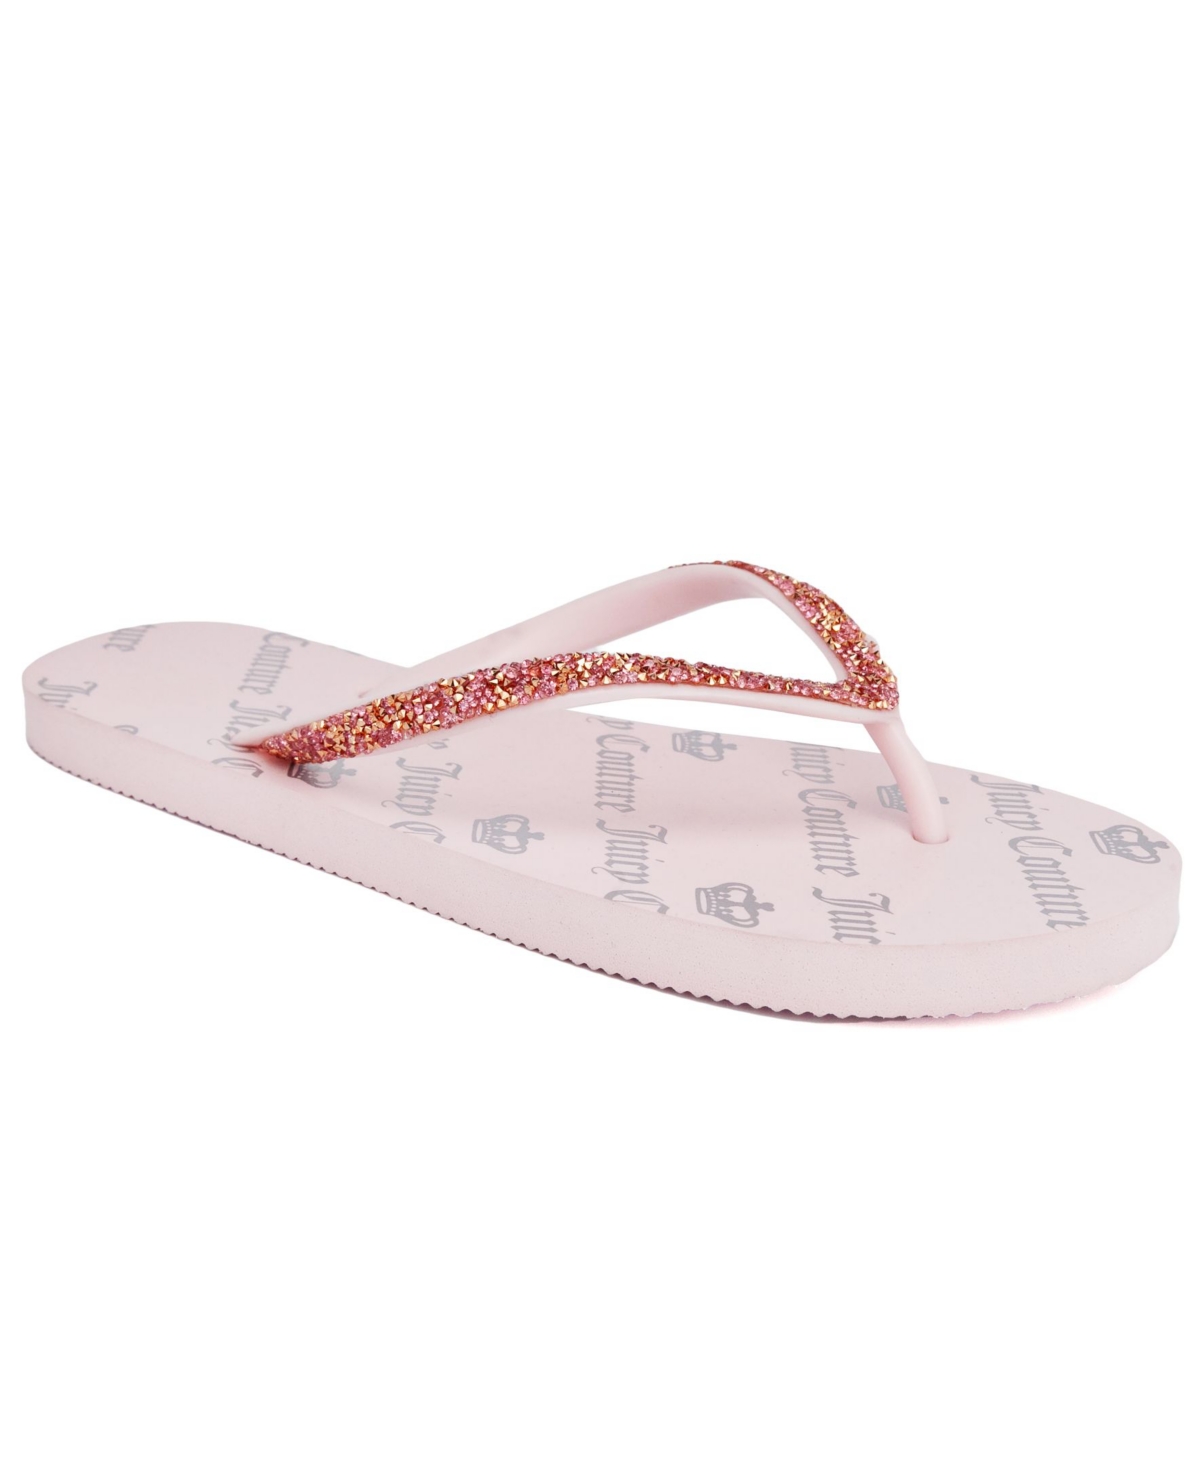 Women's Shimmery Thong Flip Flop Sandals - Gray